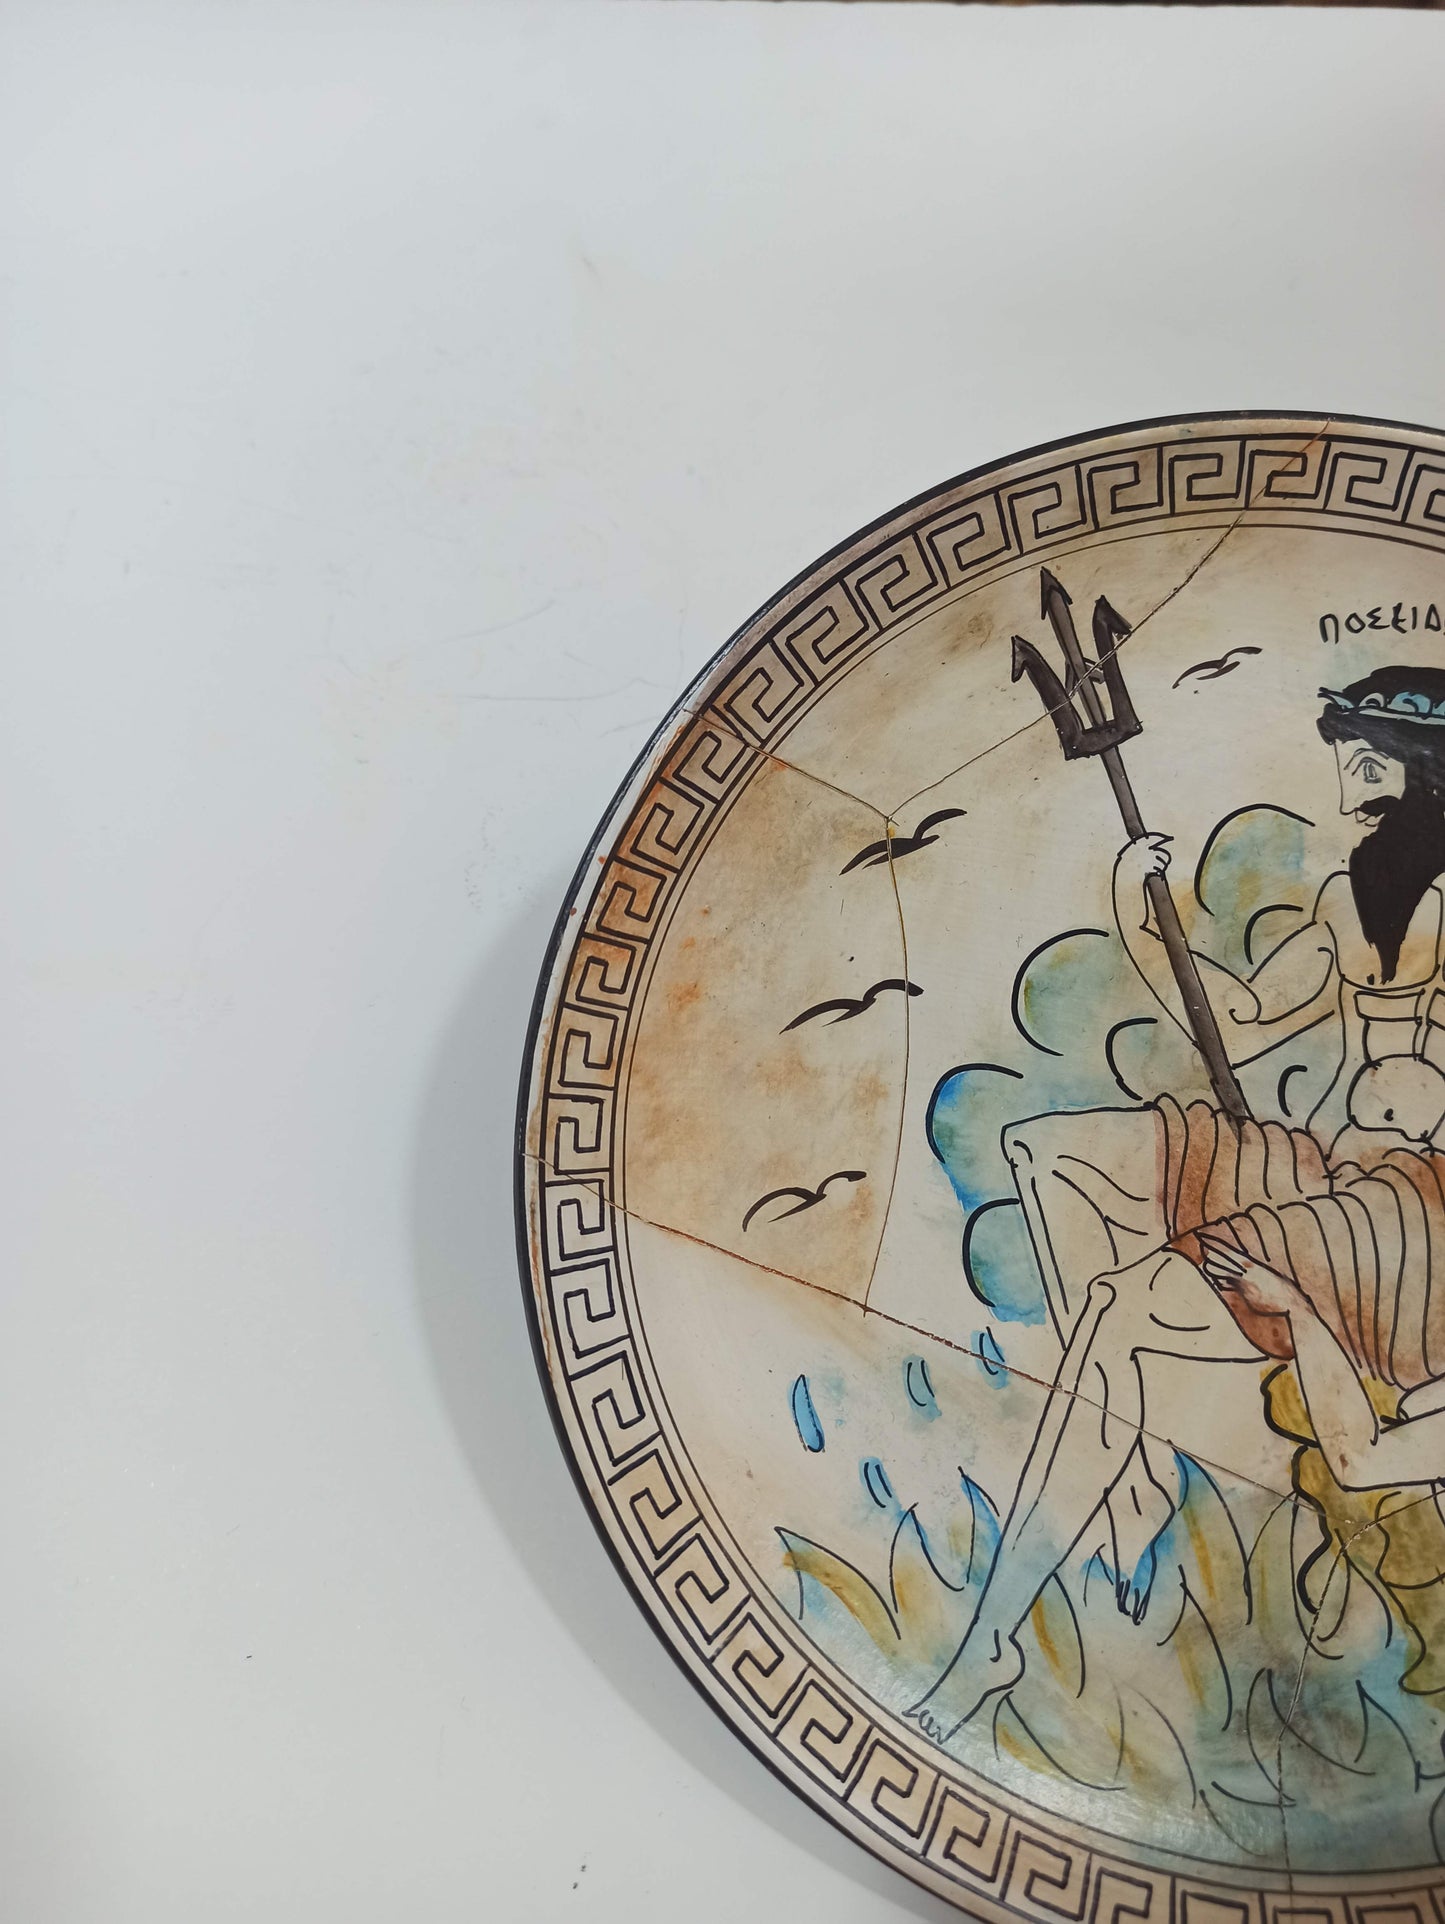 Poseidon Neptune - Greek Roman God of the Sea, Storms, Earthquakes and Horses - Protector of Seafarers - Crackle Look - Ceramic plate